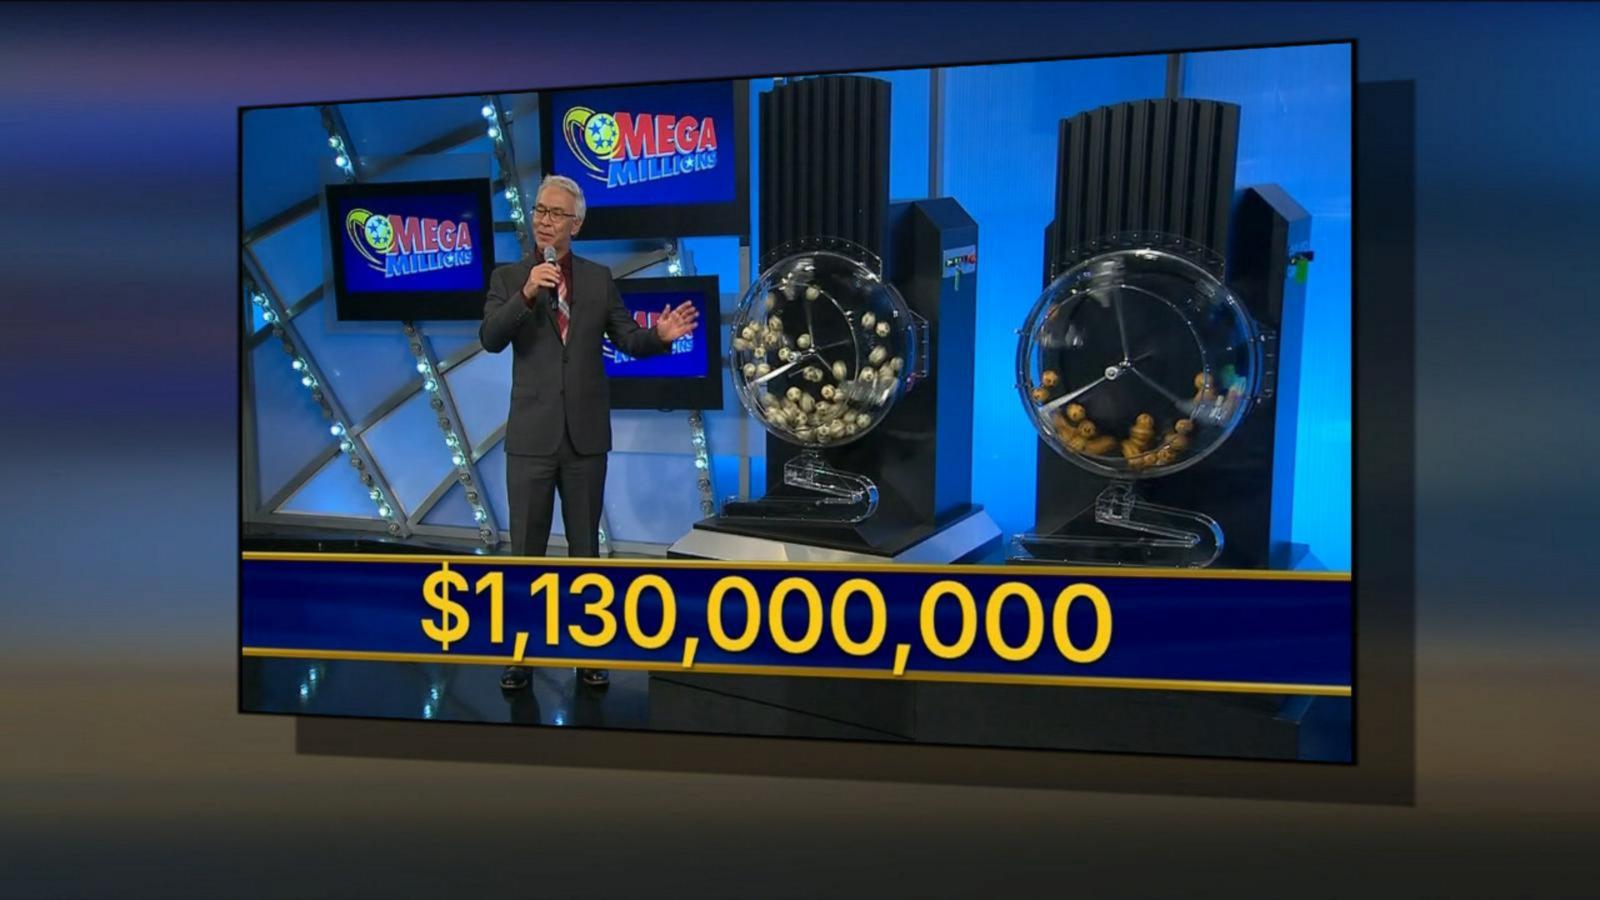 VIDEO: Single winning ticket sold for $1.13 billion Mega Millions jackpot